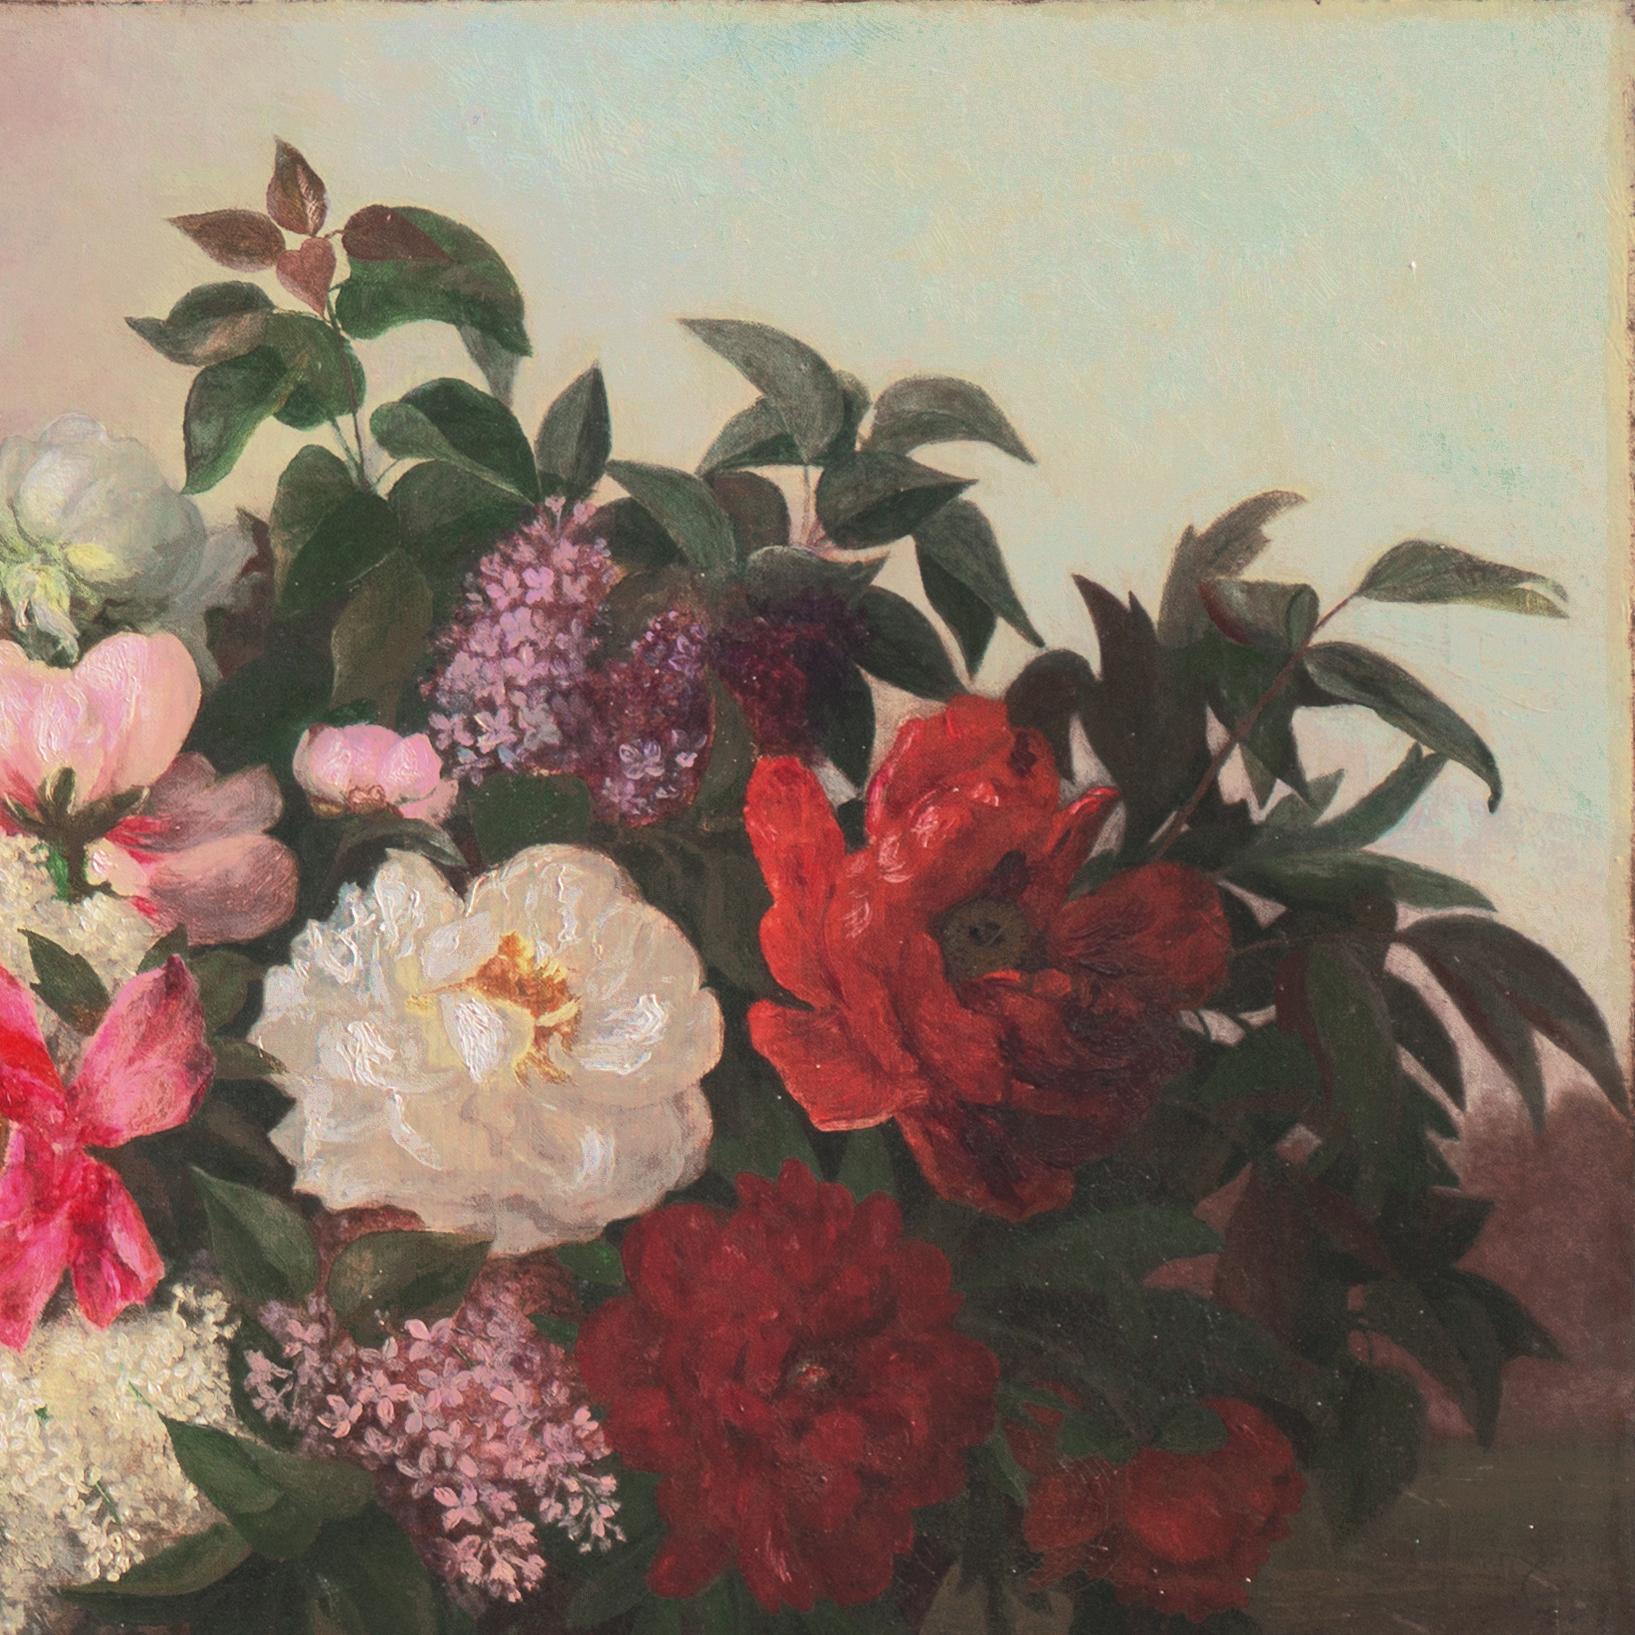 'Basket of Flowers', Large, 19th century, American School, Oil Still Life, Roses - Black Still-Life Painting by American School, 19th Century